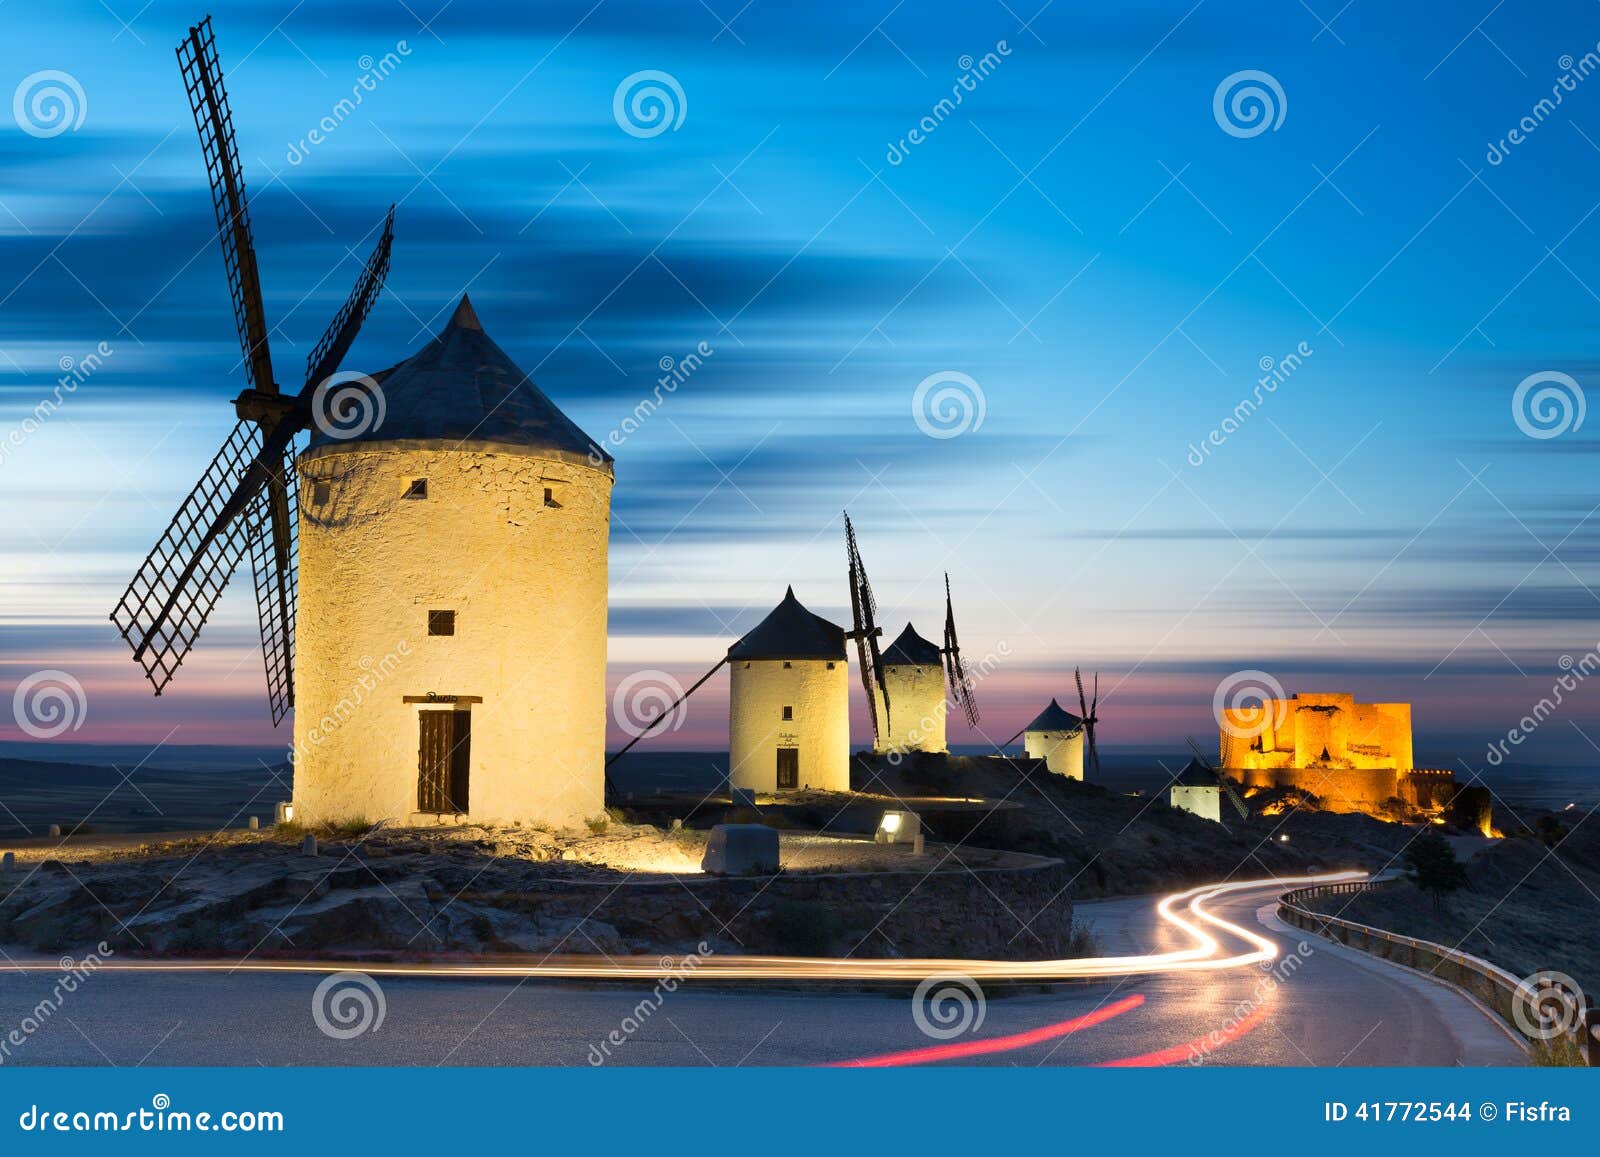 windmills after sunset, consuegra, castile-la mancha, spain